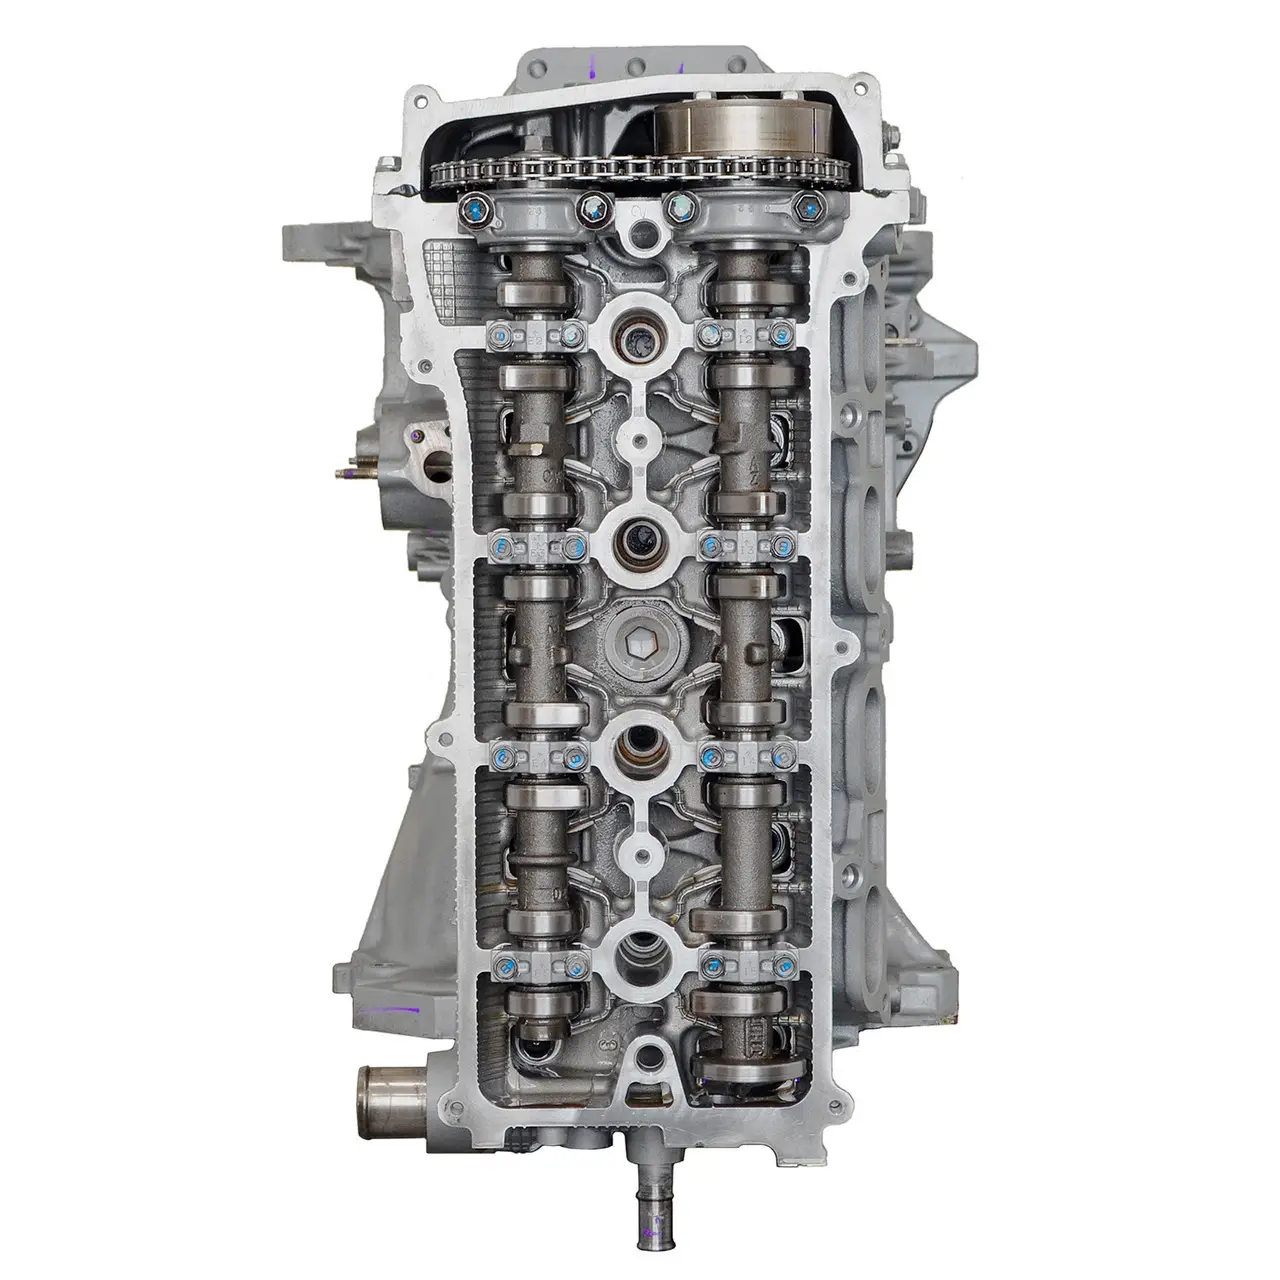 Newpars Factory Custom 2AZ Engine Bare Long Block Motor Auto Parts for Toyota Engine Assembly